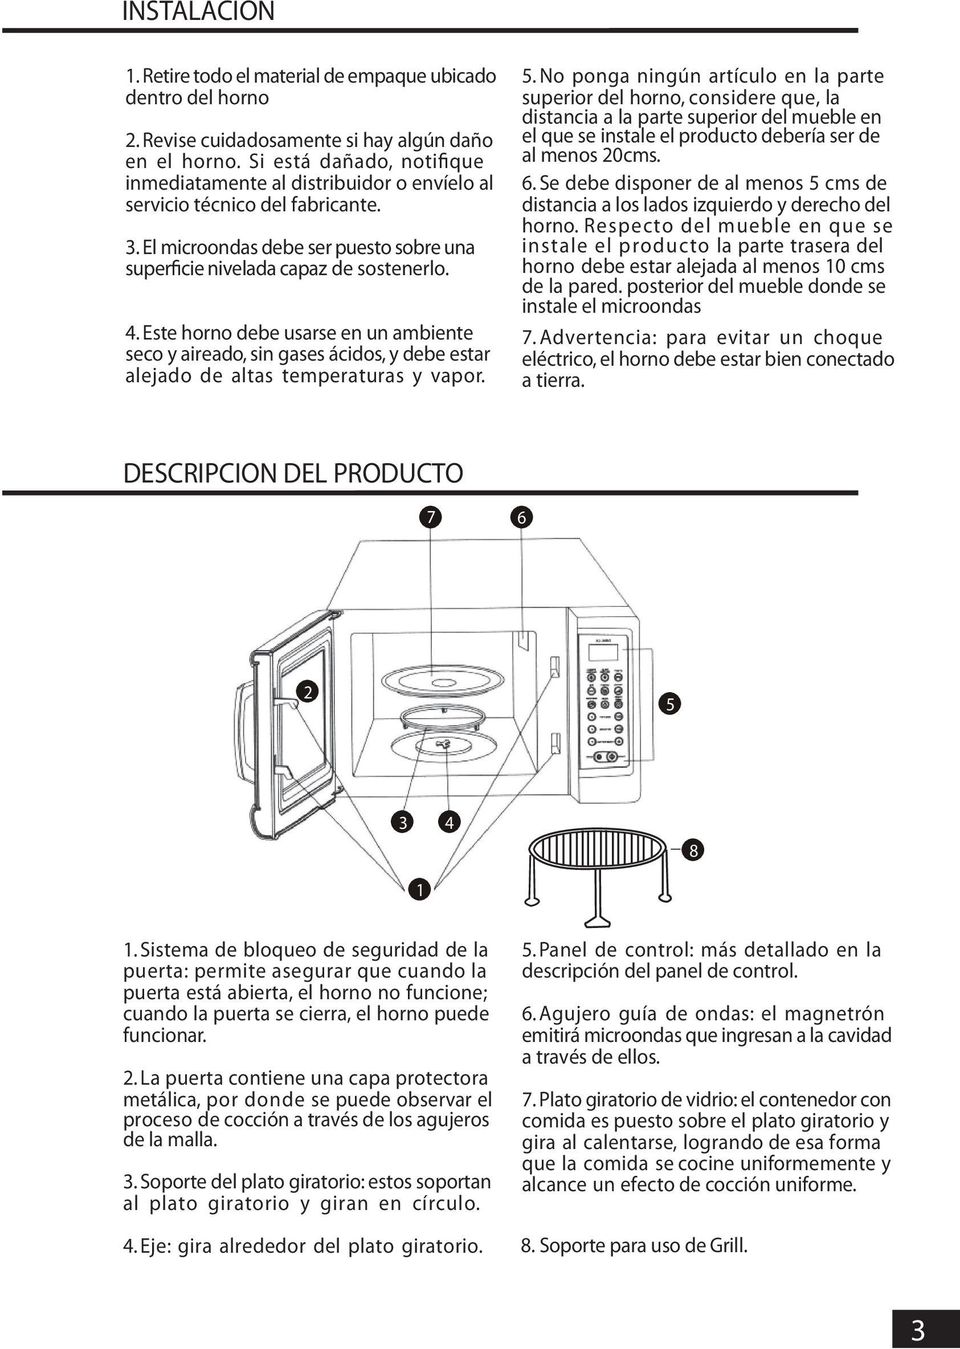 MANUAL DEL USUARIO Horno grill Modelos WMD25GS - PDF Free Download